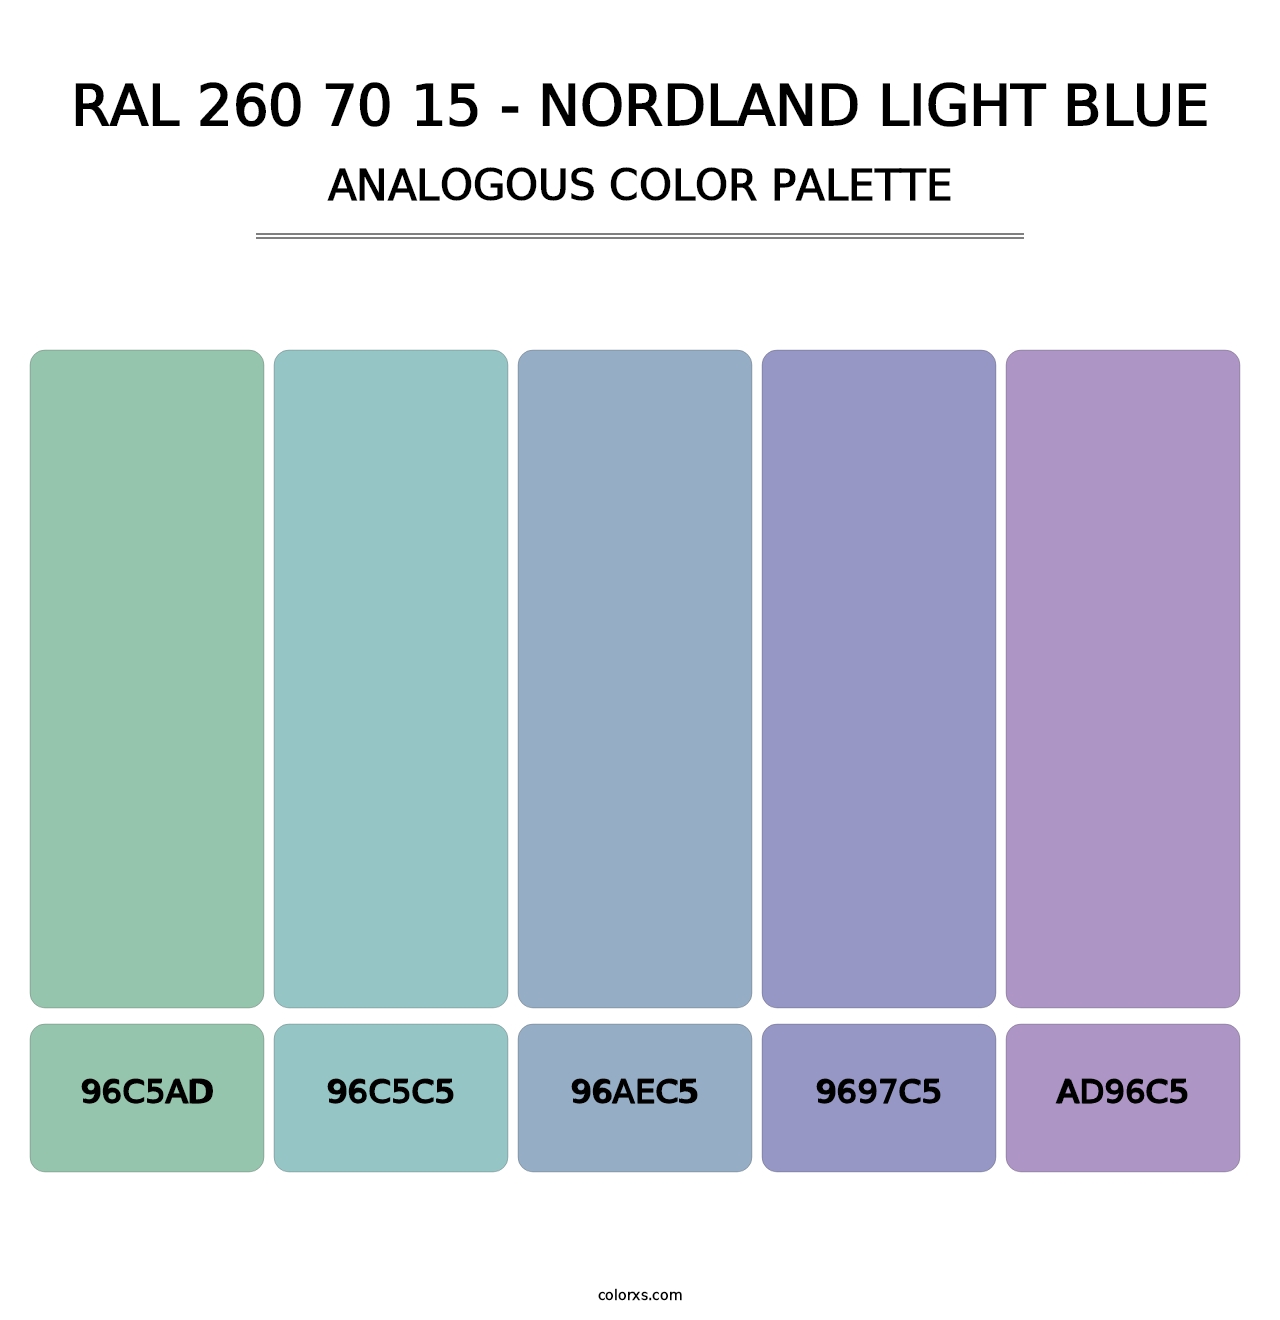 RAL 260 70 15 - Nordland Light Blue - Analogous Color Palette